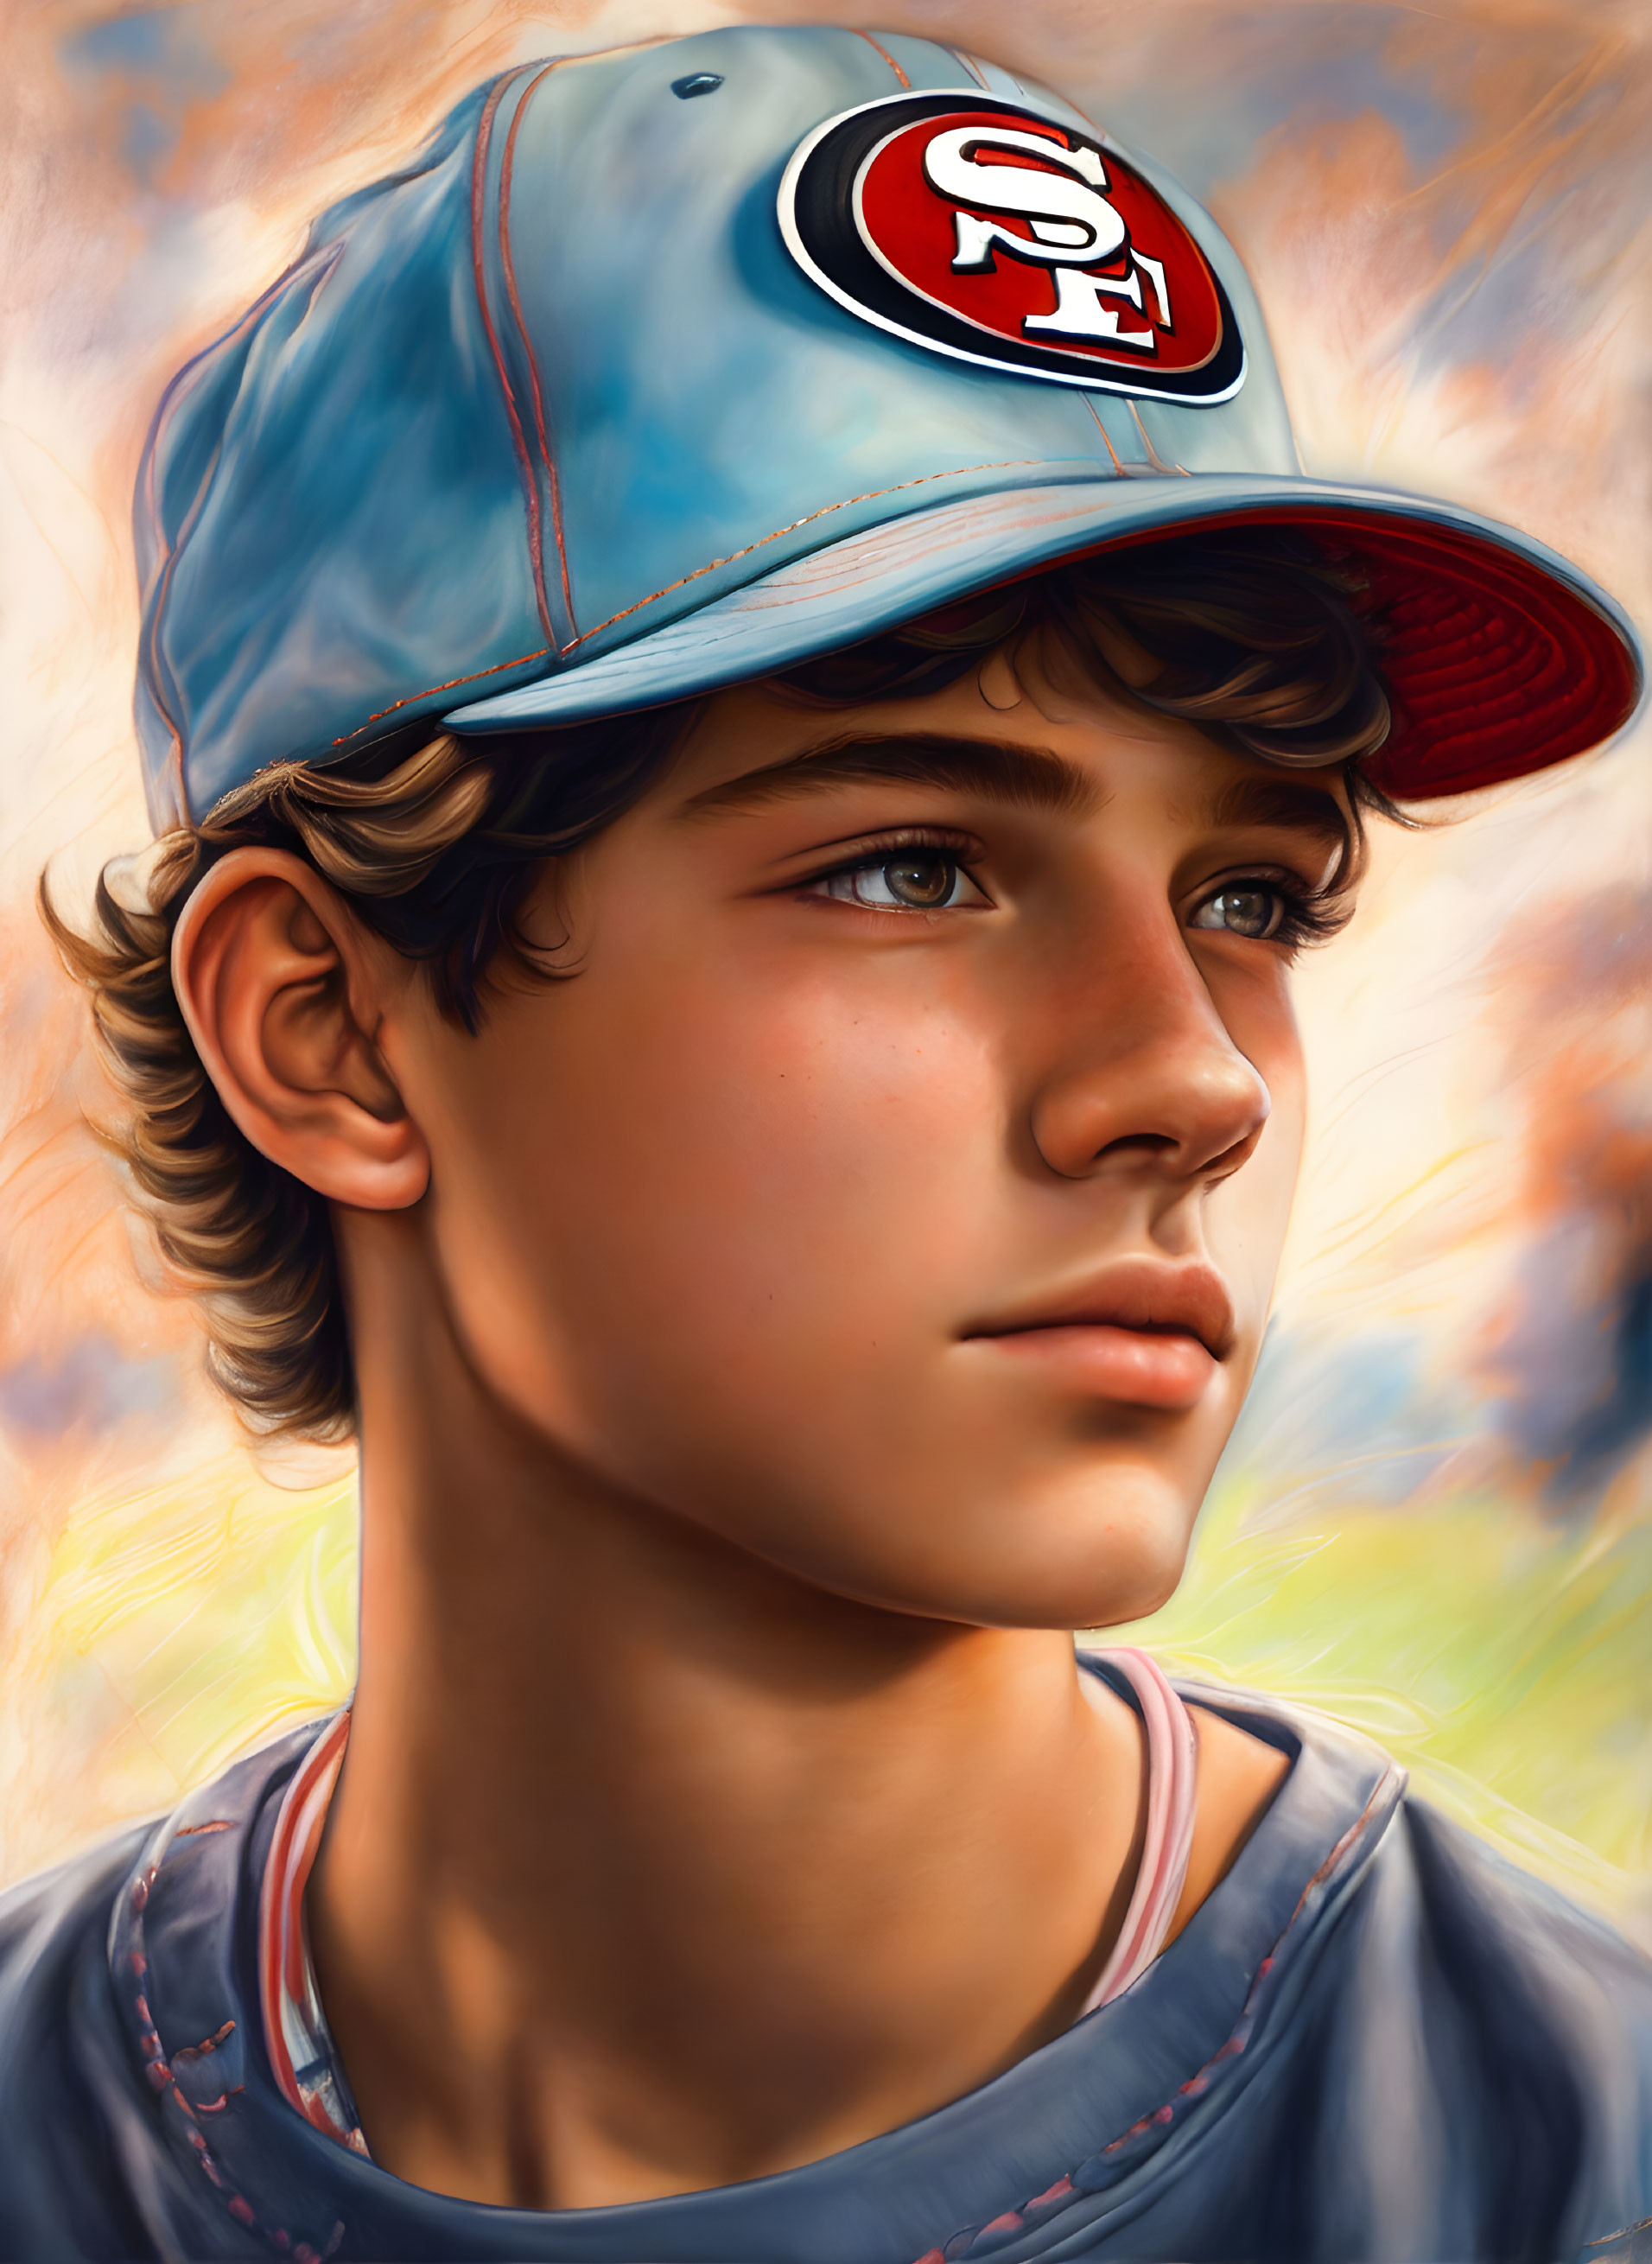 Teenage boy, has a baseball 49ers cap on